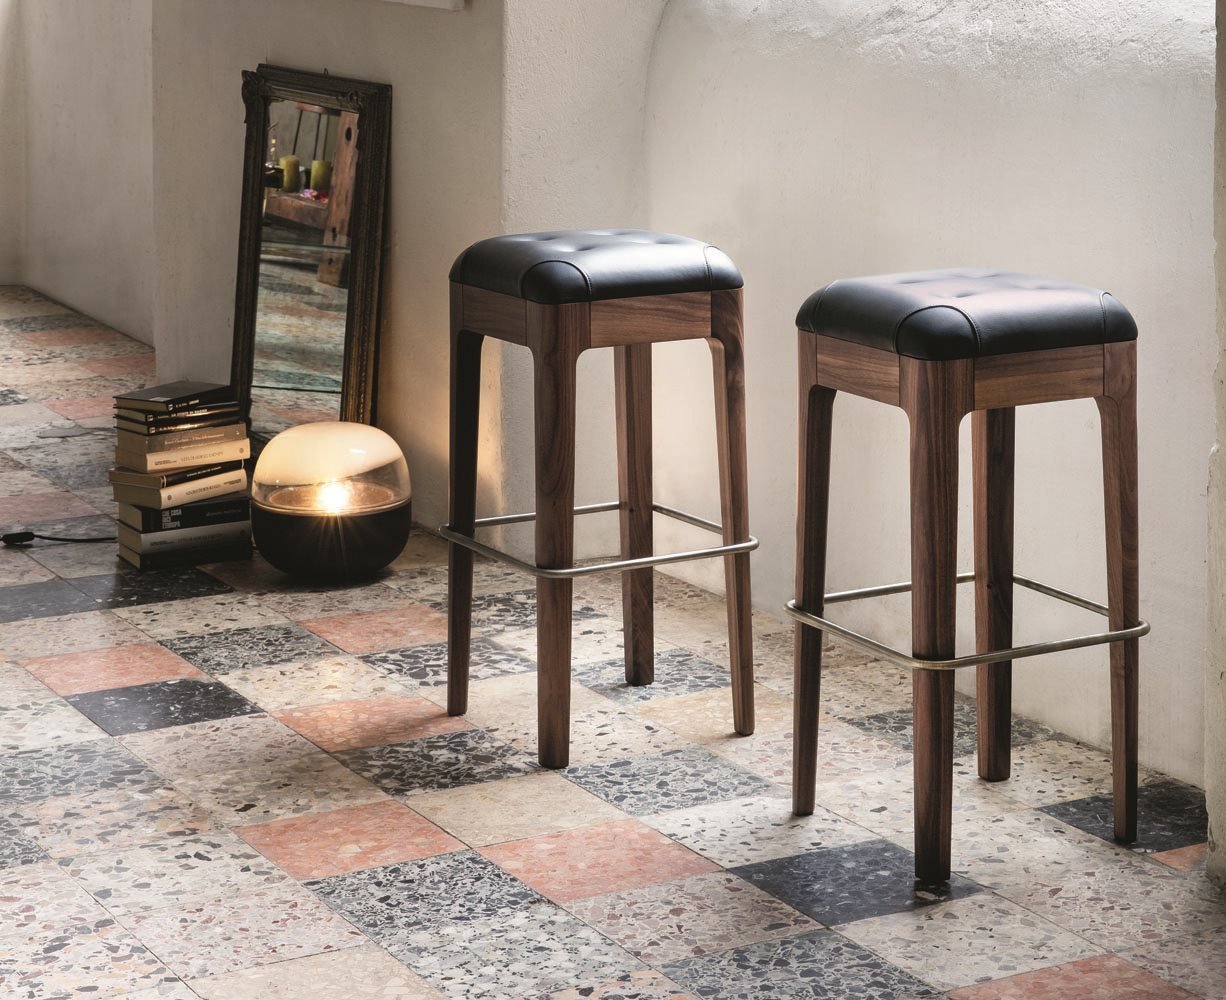 Webby stool Porada Italian furniture Cyprus Nicosia Takis Angelides Furnihome